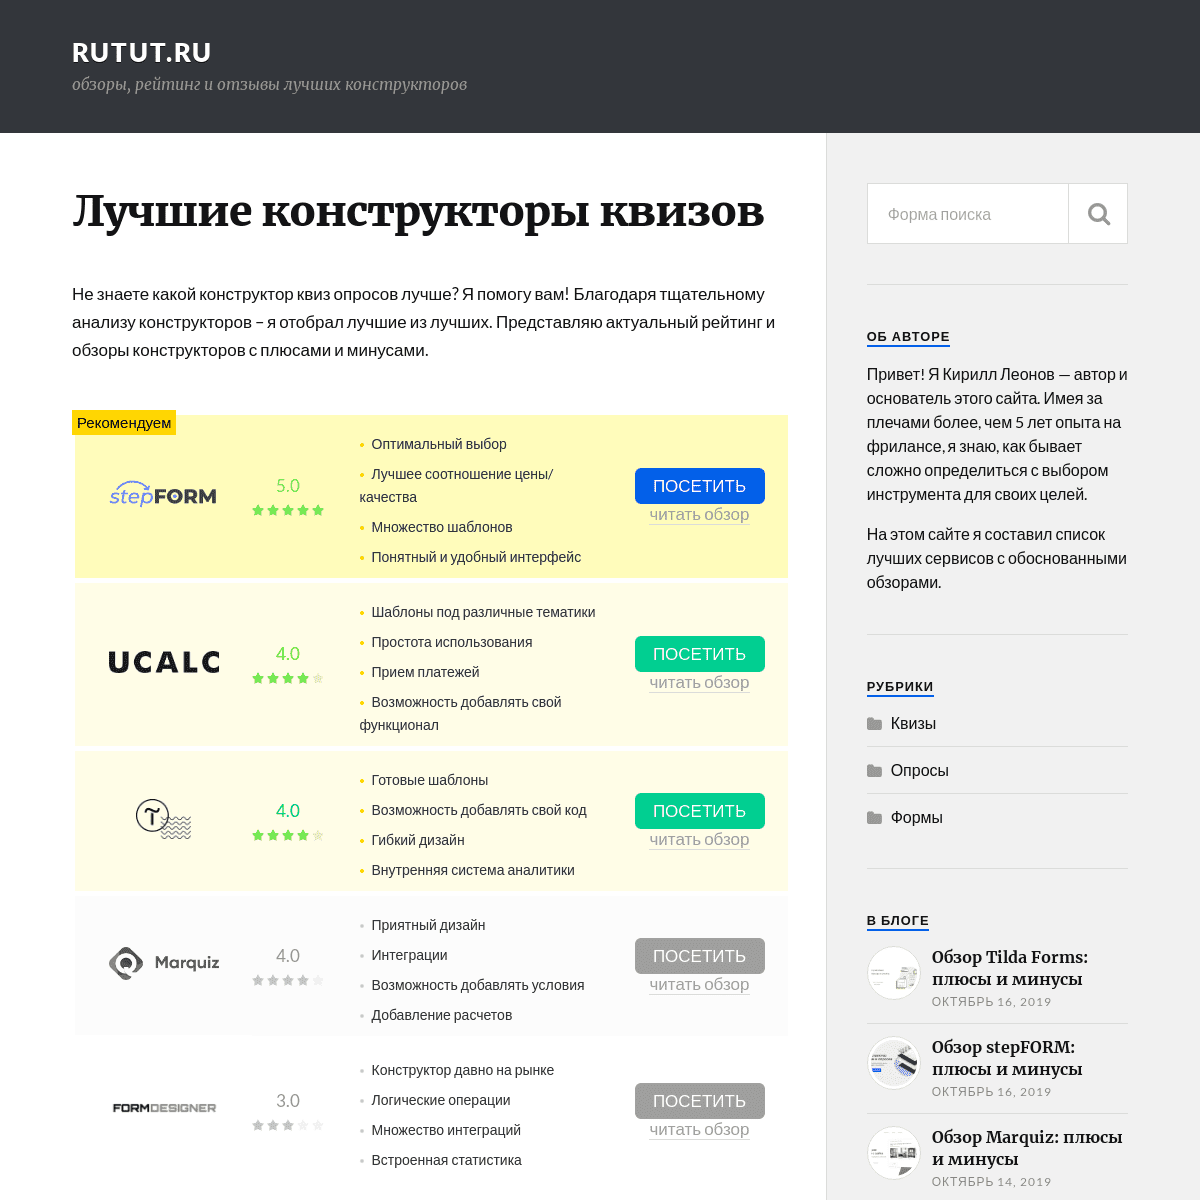 A complete backup of rutut.ru